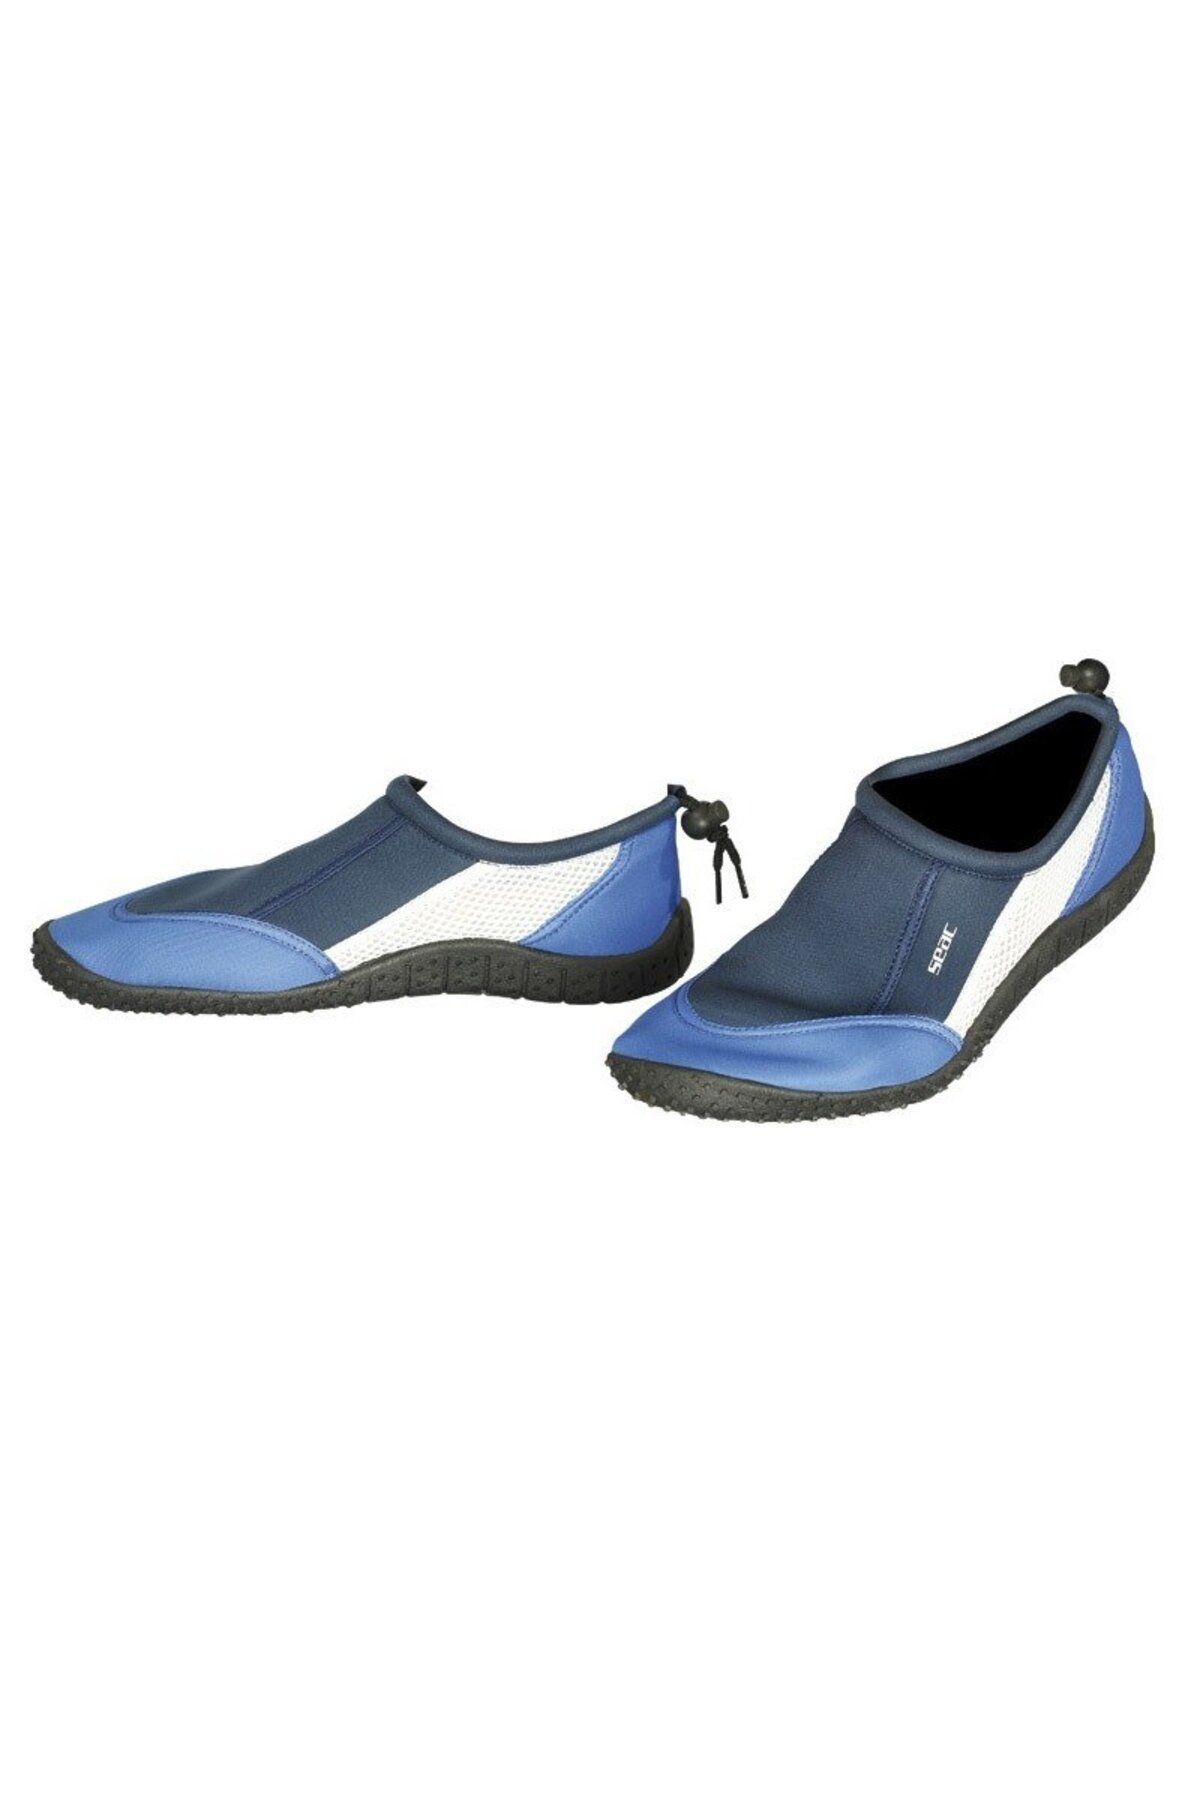 Seac Sub Unisex Mavi Siyah Plaj Ayakkabısı